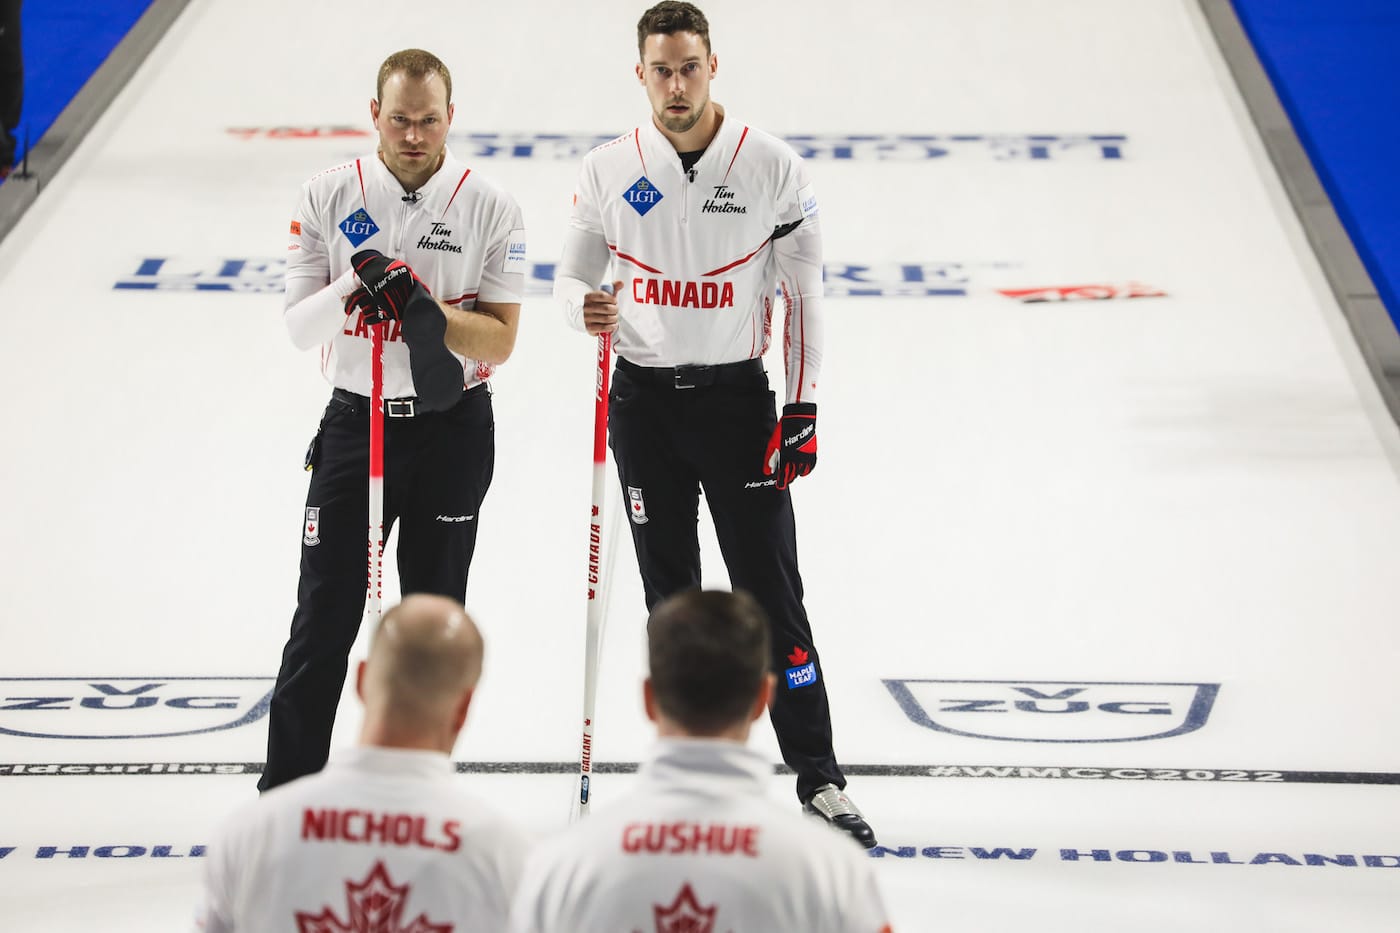 Curling Canada Canadas back on track!